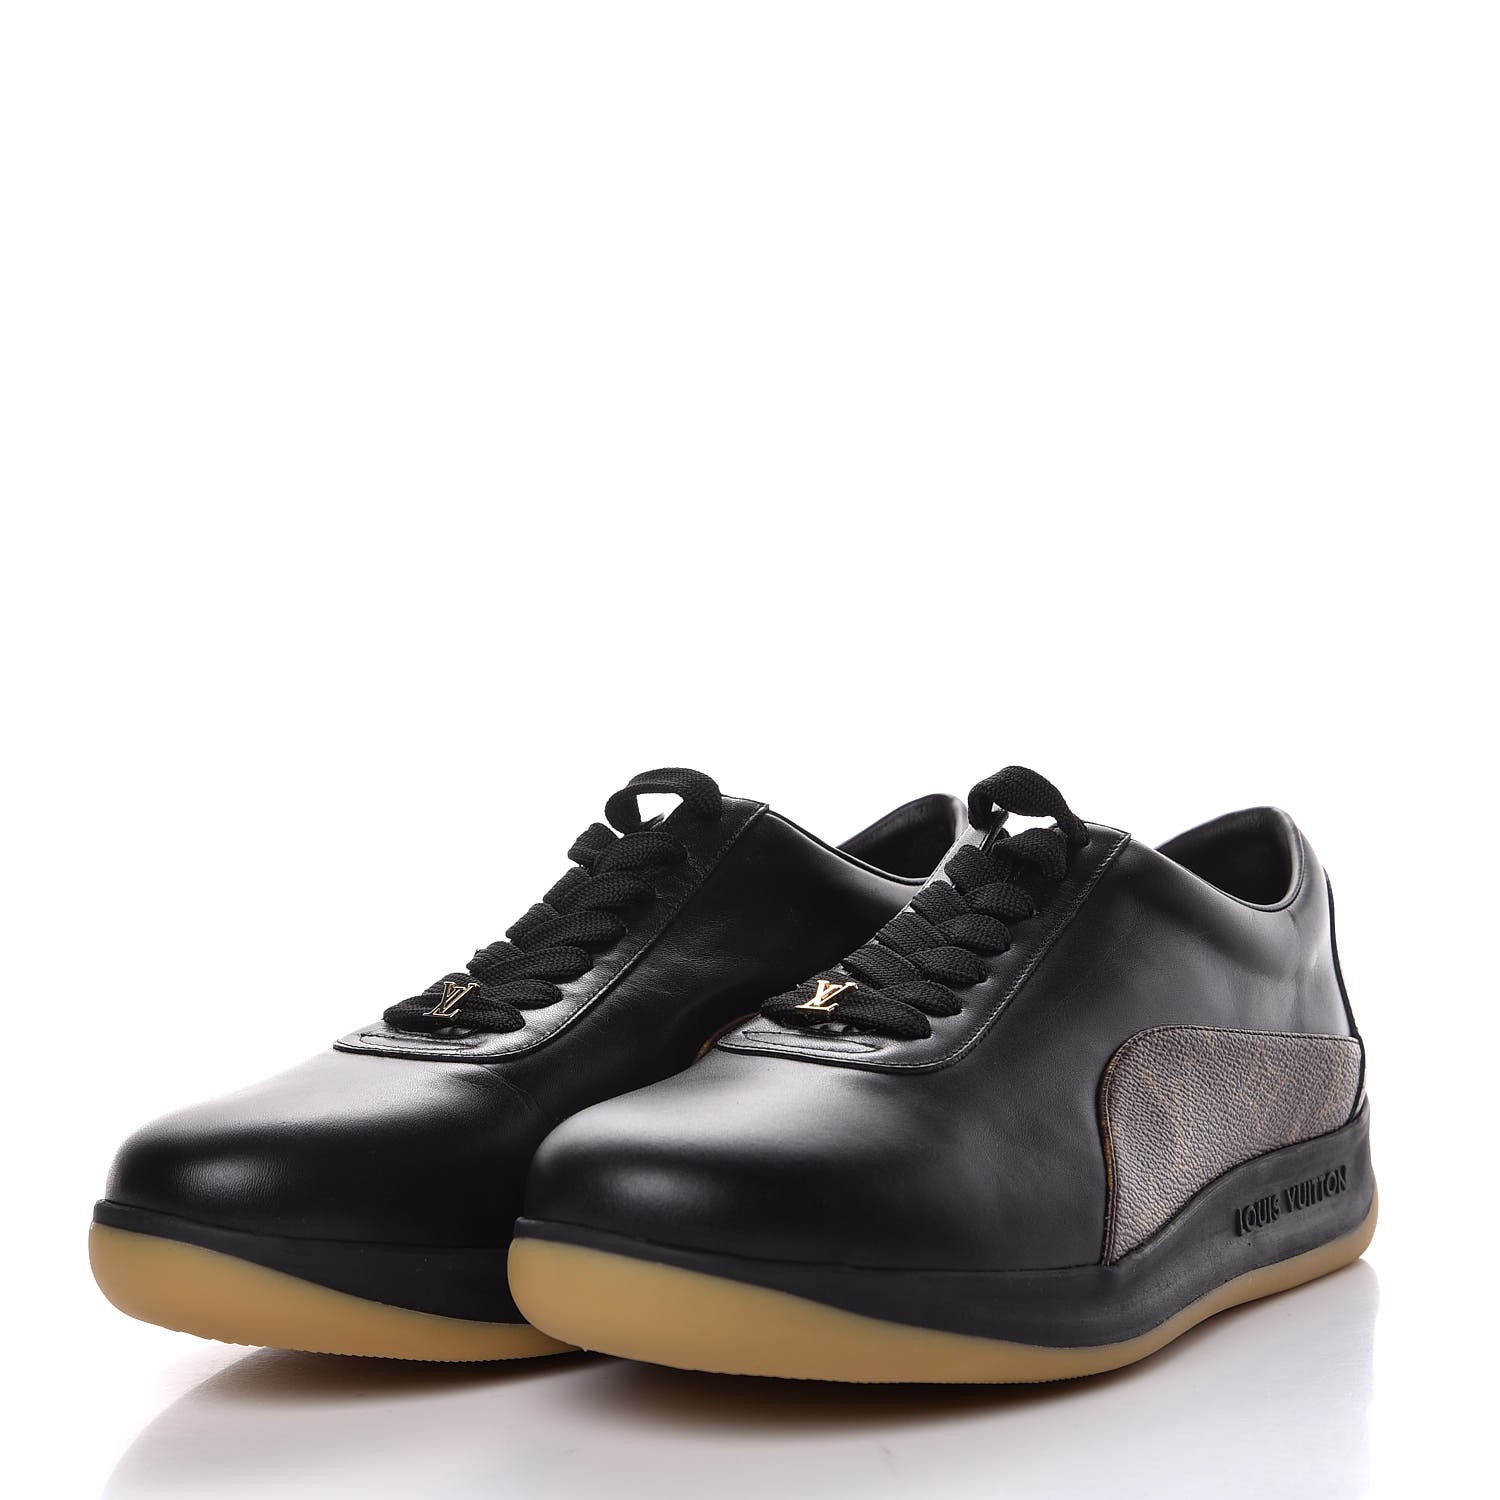 LOUIS VUITTON X SUPREME Calfskin Monogram Supreme Sneakers 7.5 Black 331636